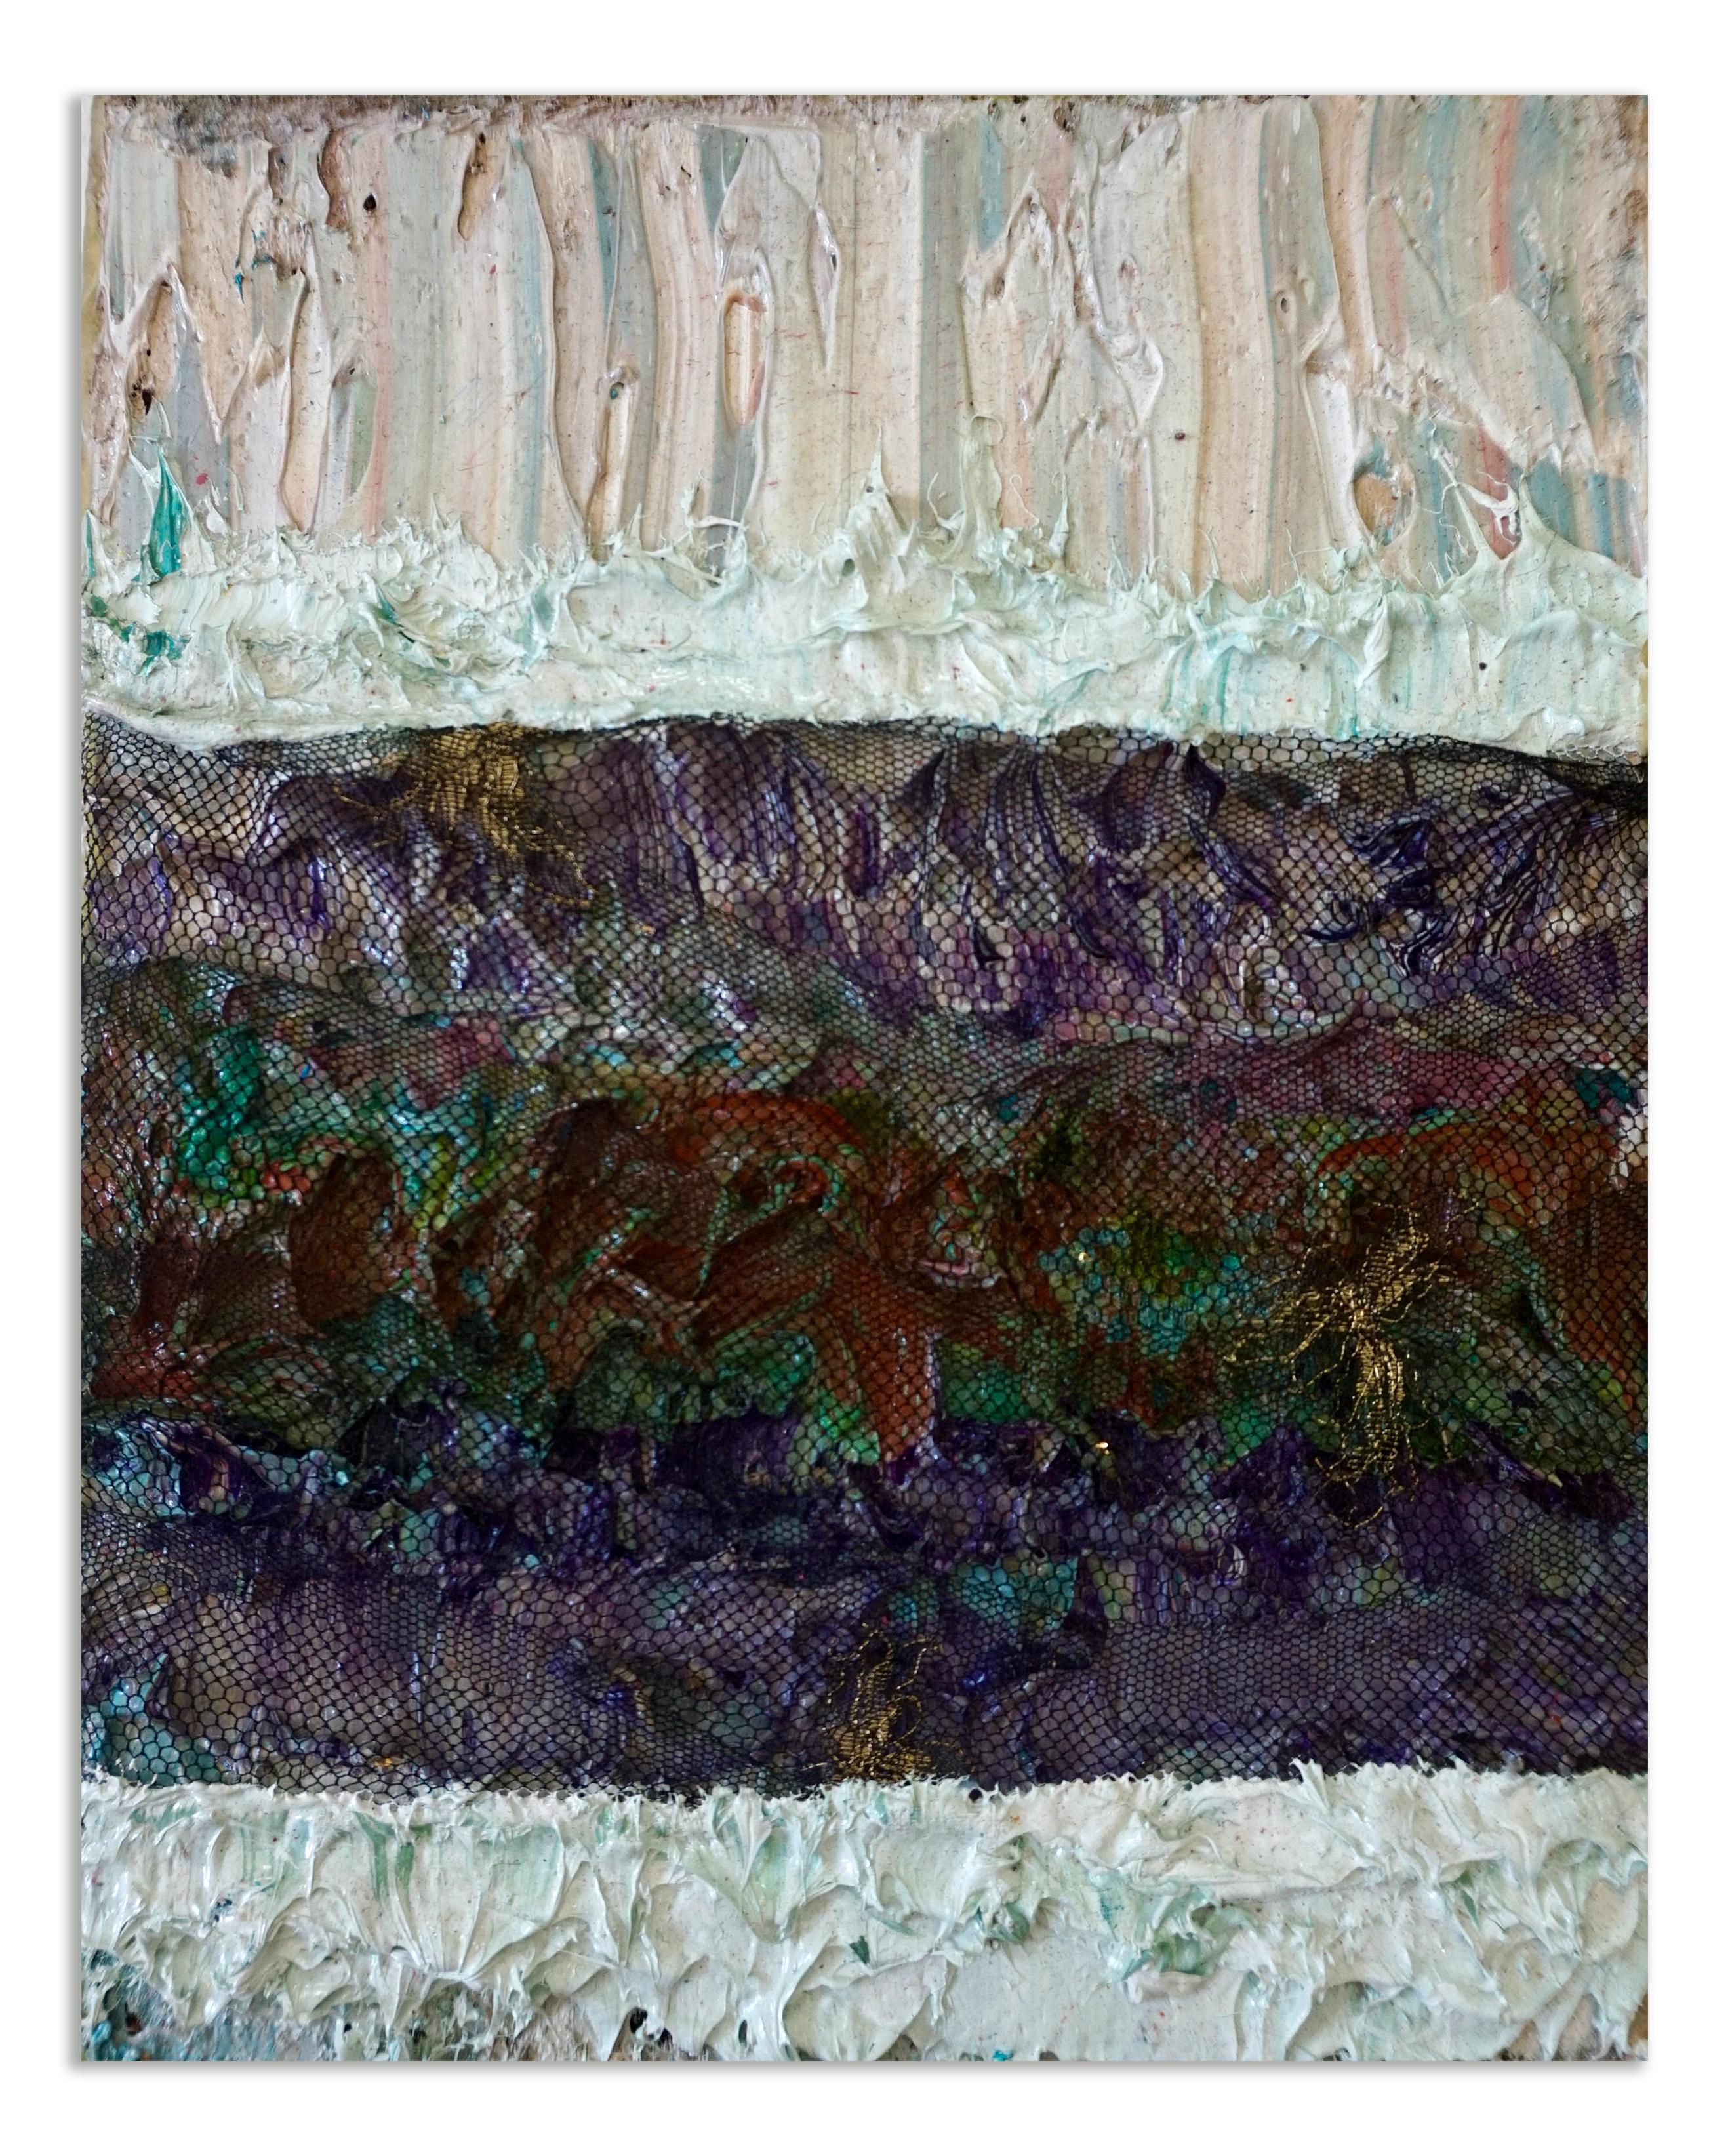 Tactile memory #128. Mixed media abstract painting, acrylic, and lace on canvas - Painting by Natasha Zupan